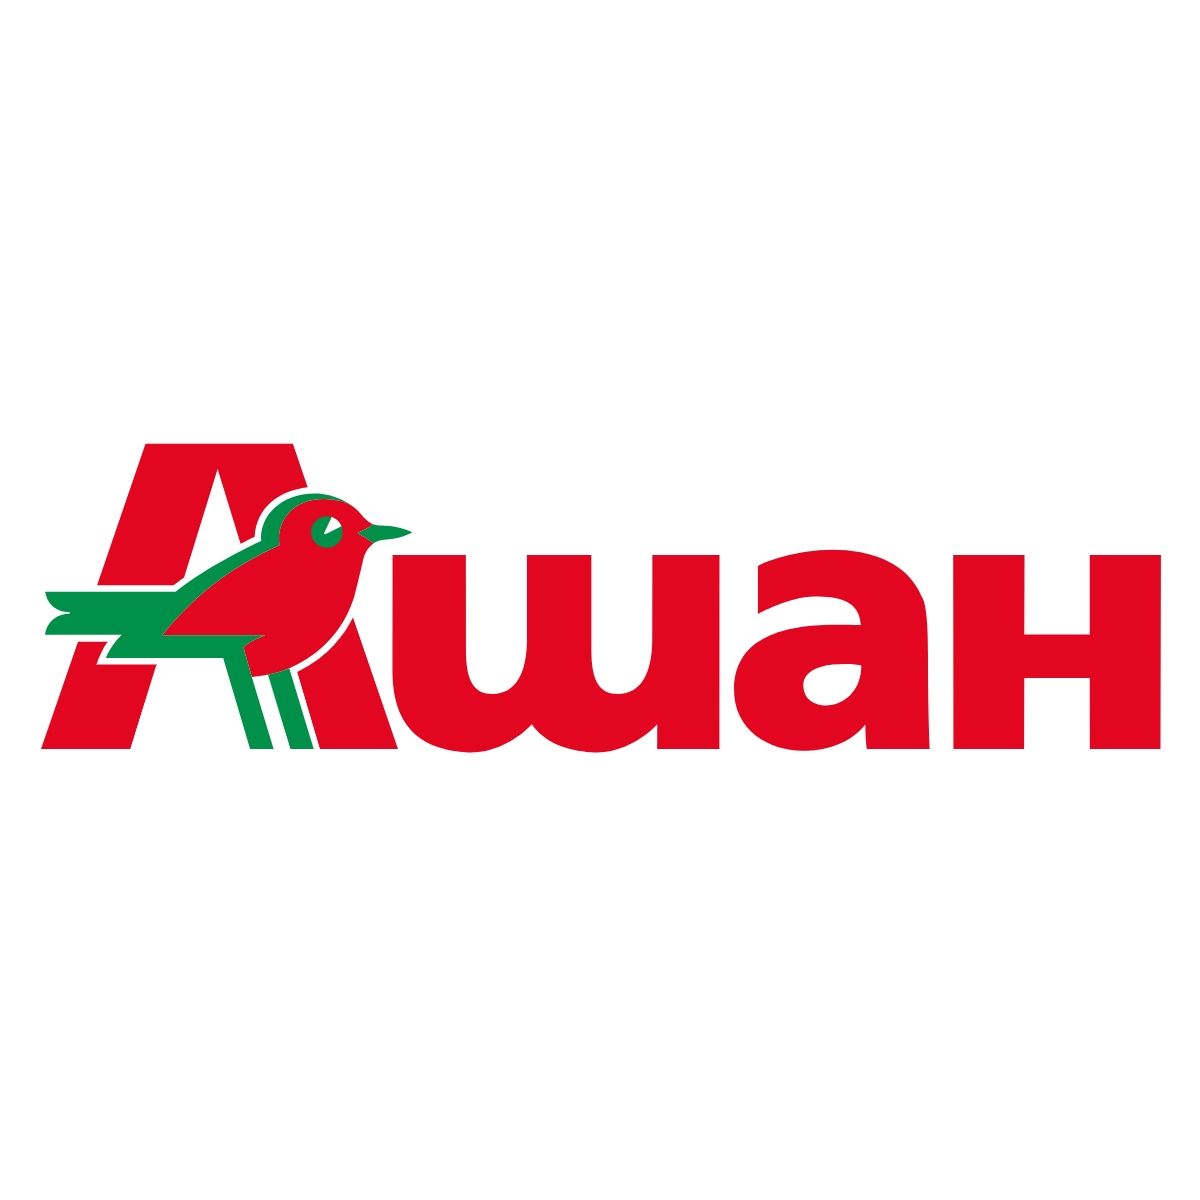 Auchan logo. Ашан. Ашан лого. Ашан логотип на прозрачном фоне. ООО Ашан логотип.